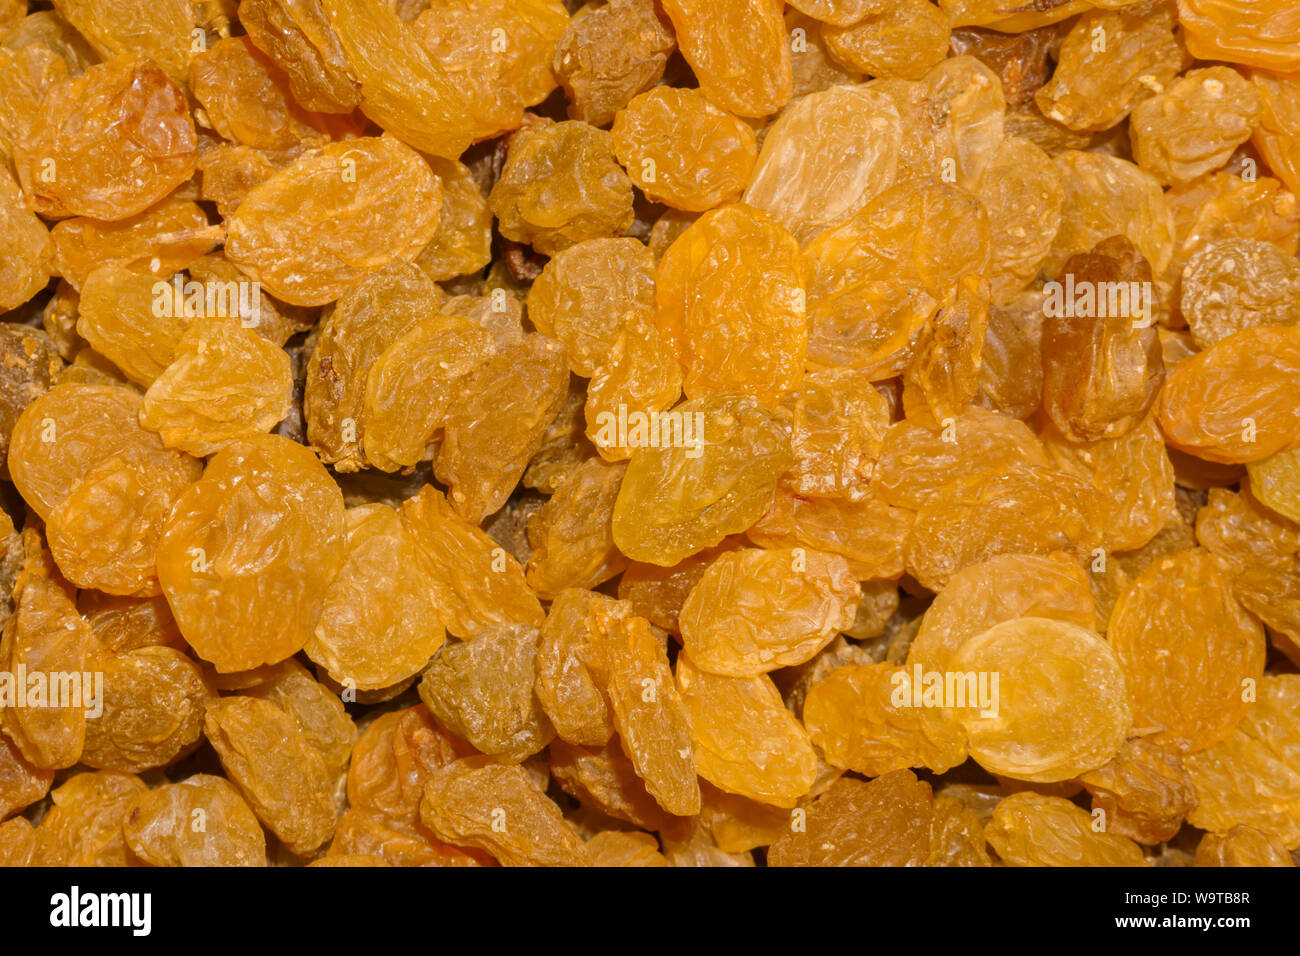 background - large yellow golden raisins Stock Photo